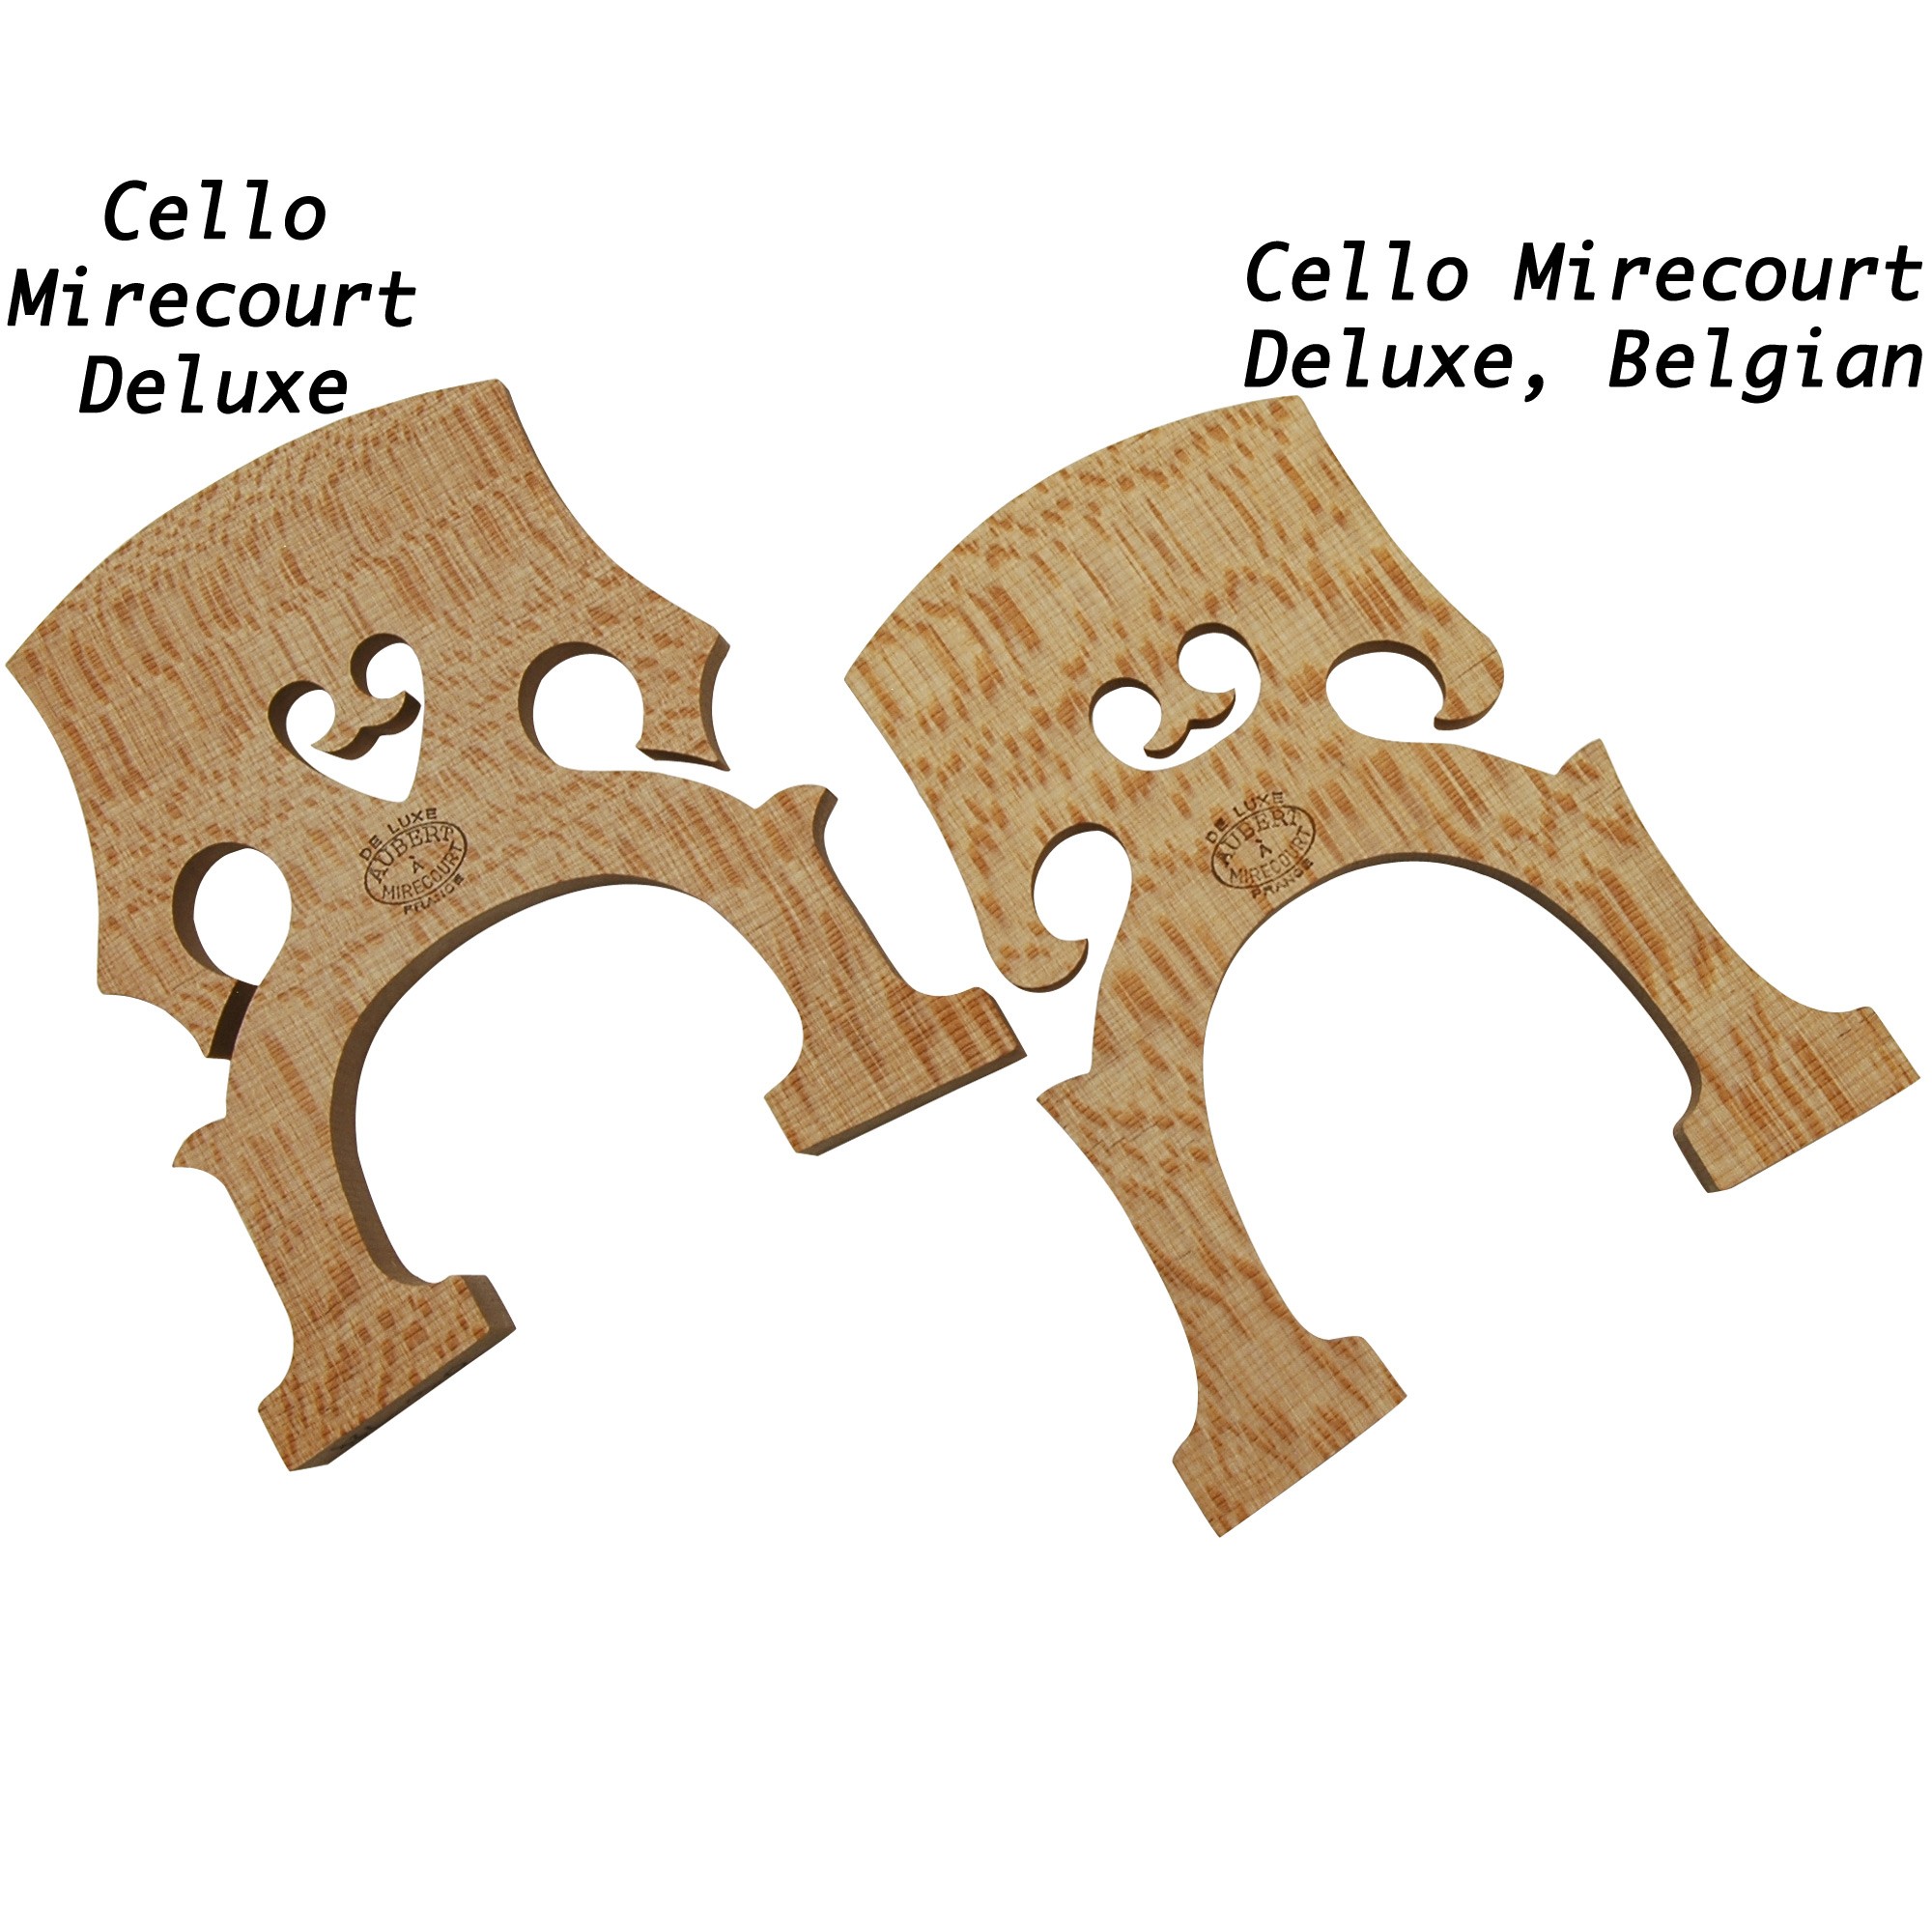 Cello Mirecourt Deluxe